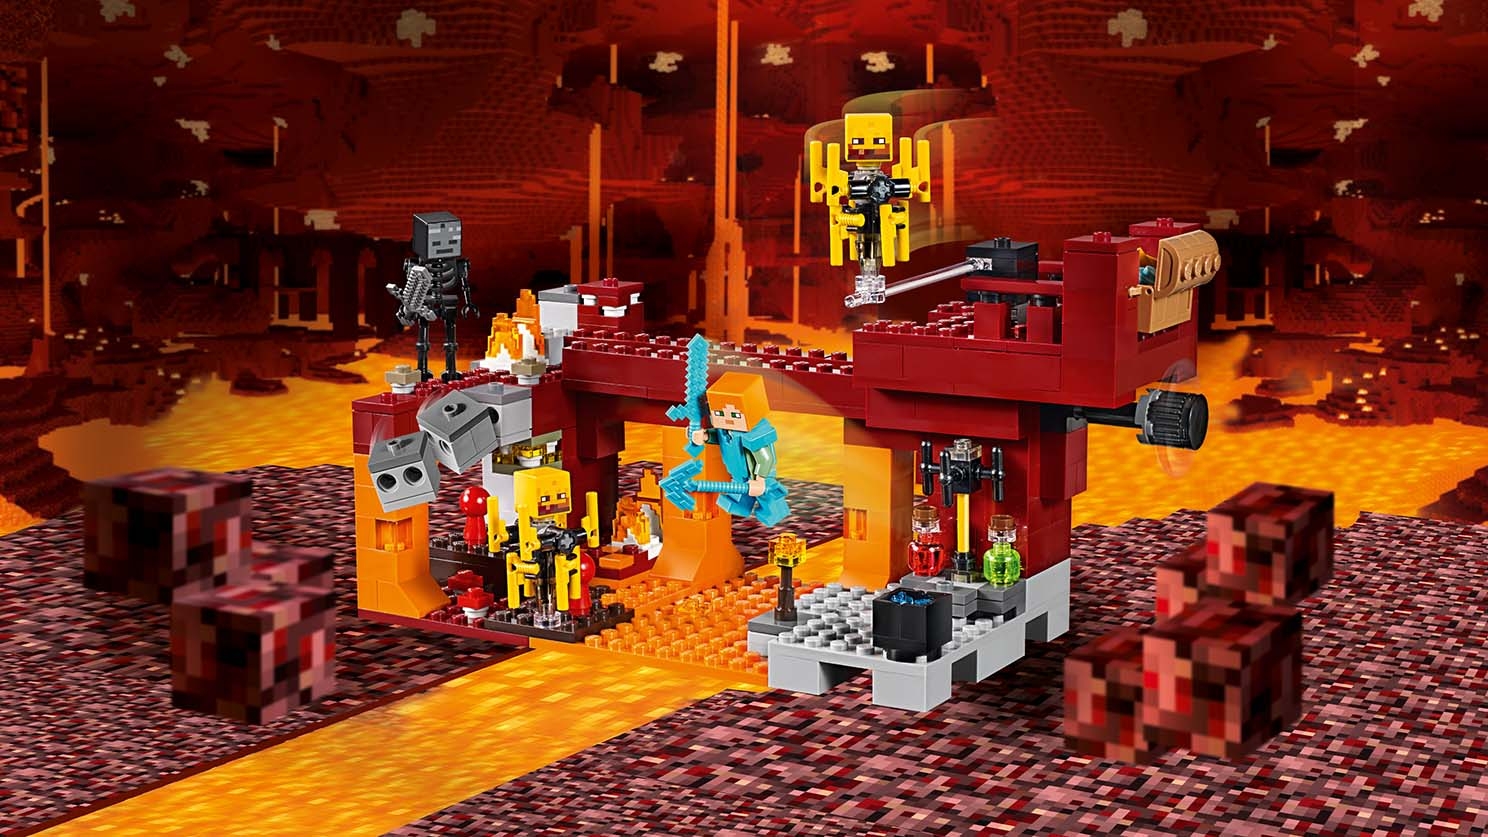 The Blaze Bridge 21154 - LEGOÂ® Minecraftâ¢ Sets - LEGO.com for kids